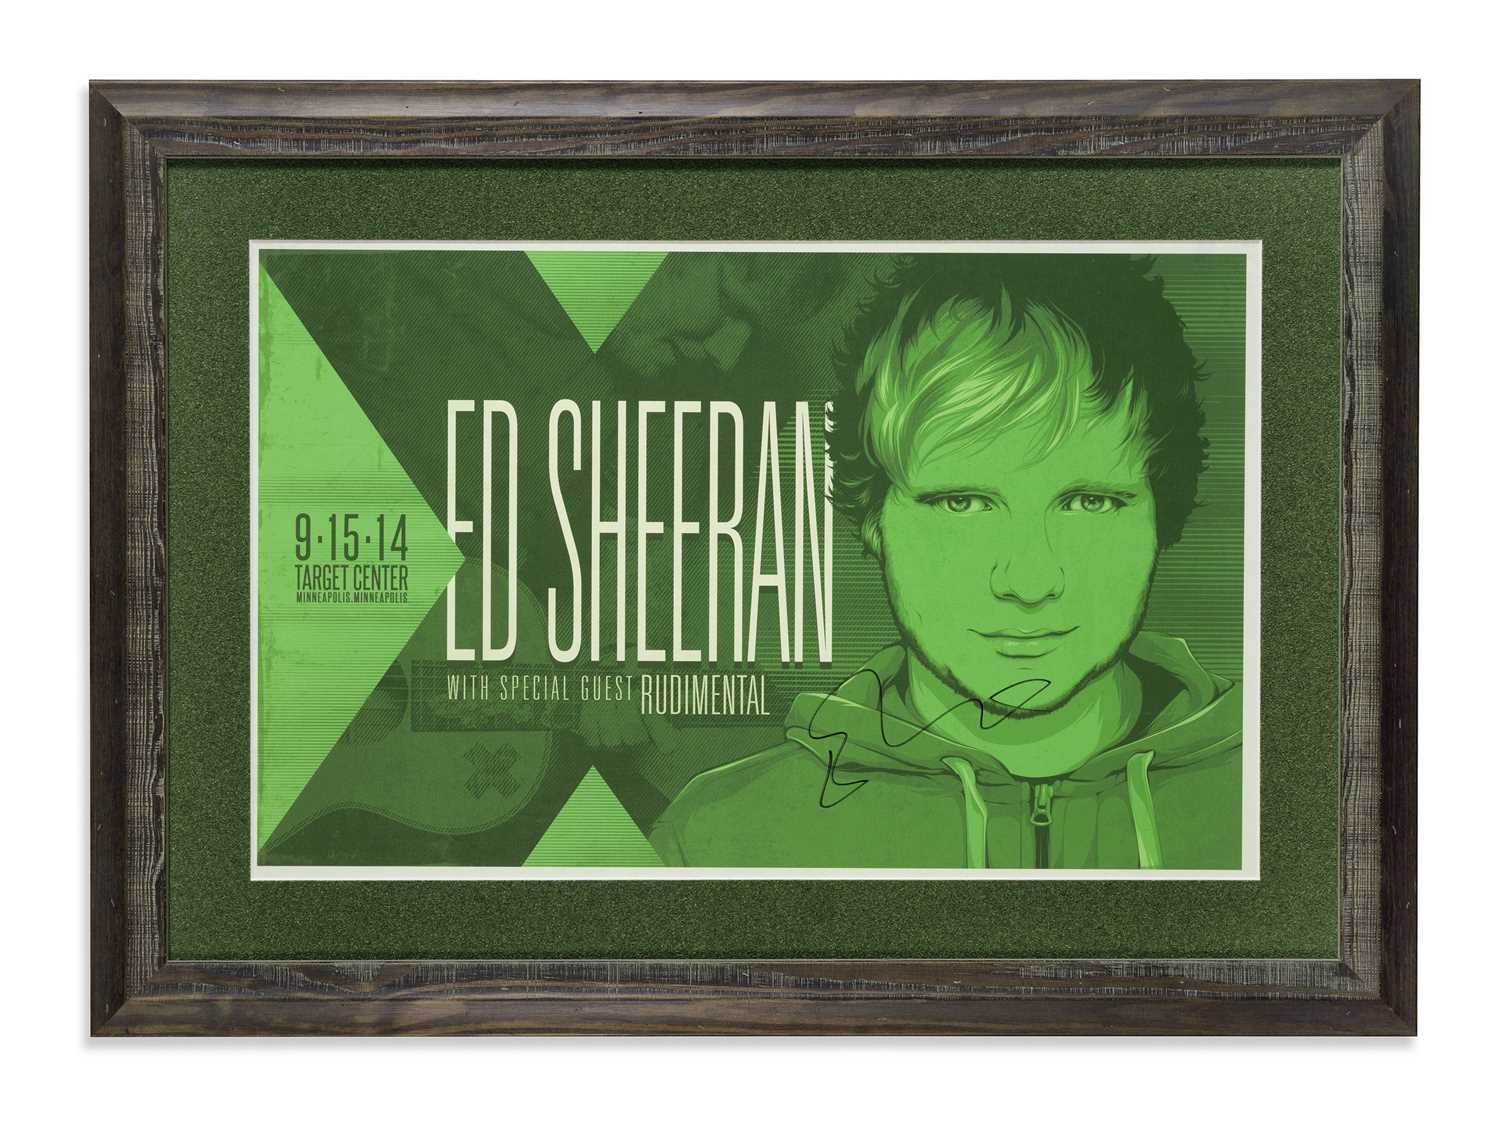 Lot 86 - Signed Ed Sheeran Gig Poster, Target Center,...